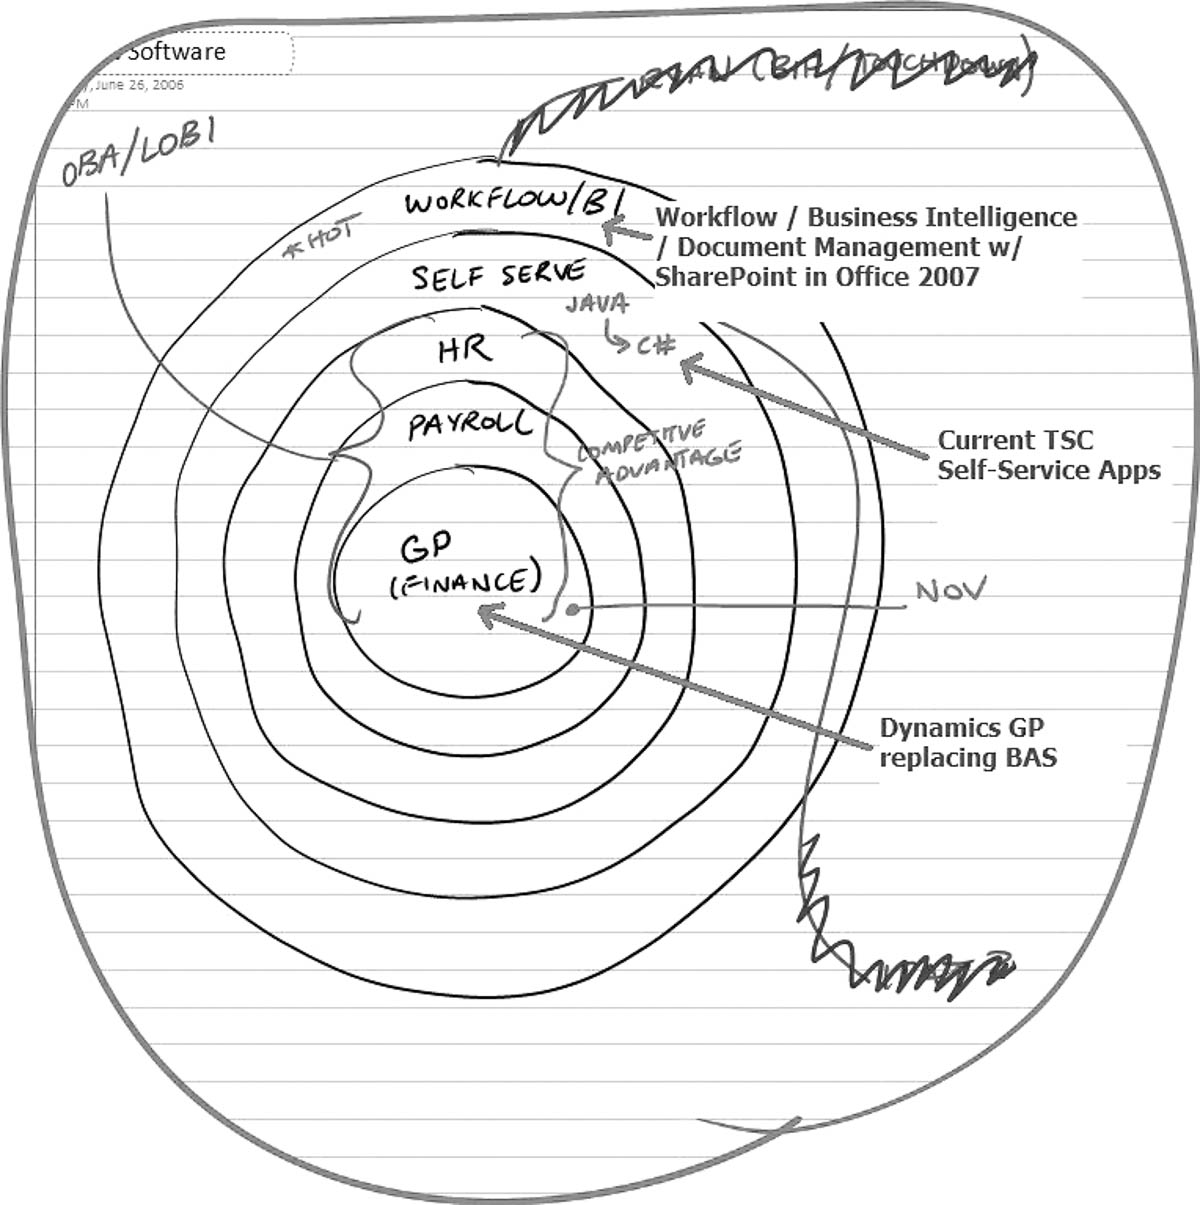 Ryan Storgaard, “onion diagram of management,” whiteboard drawing, 2006.